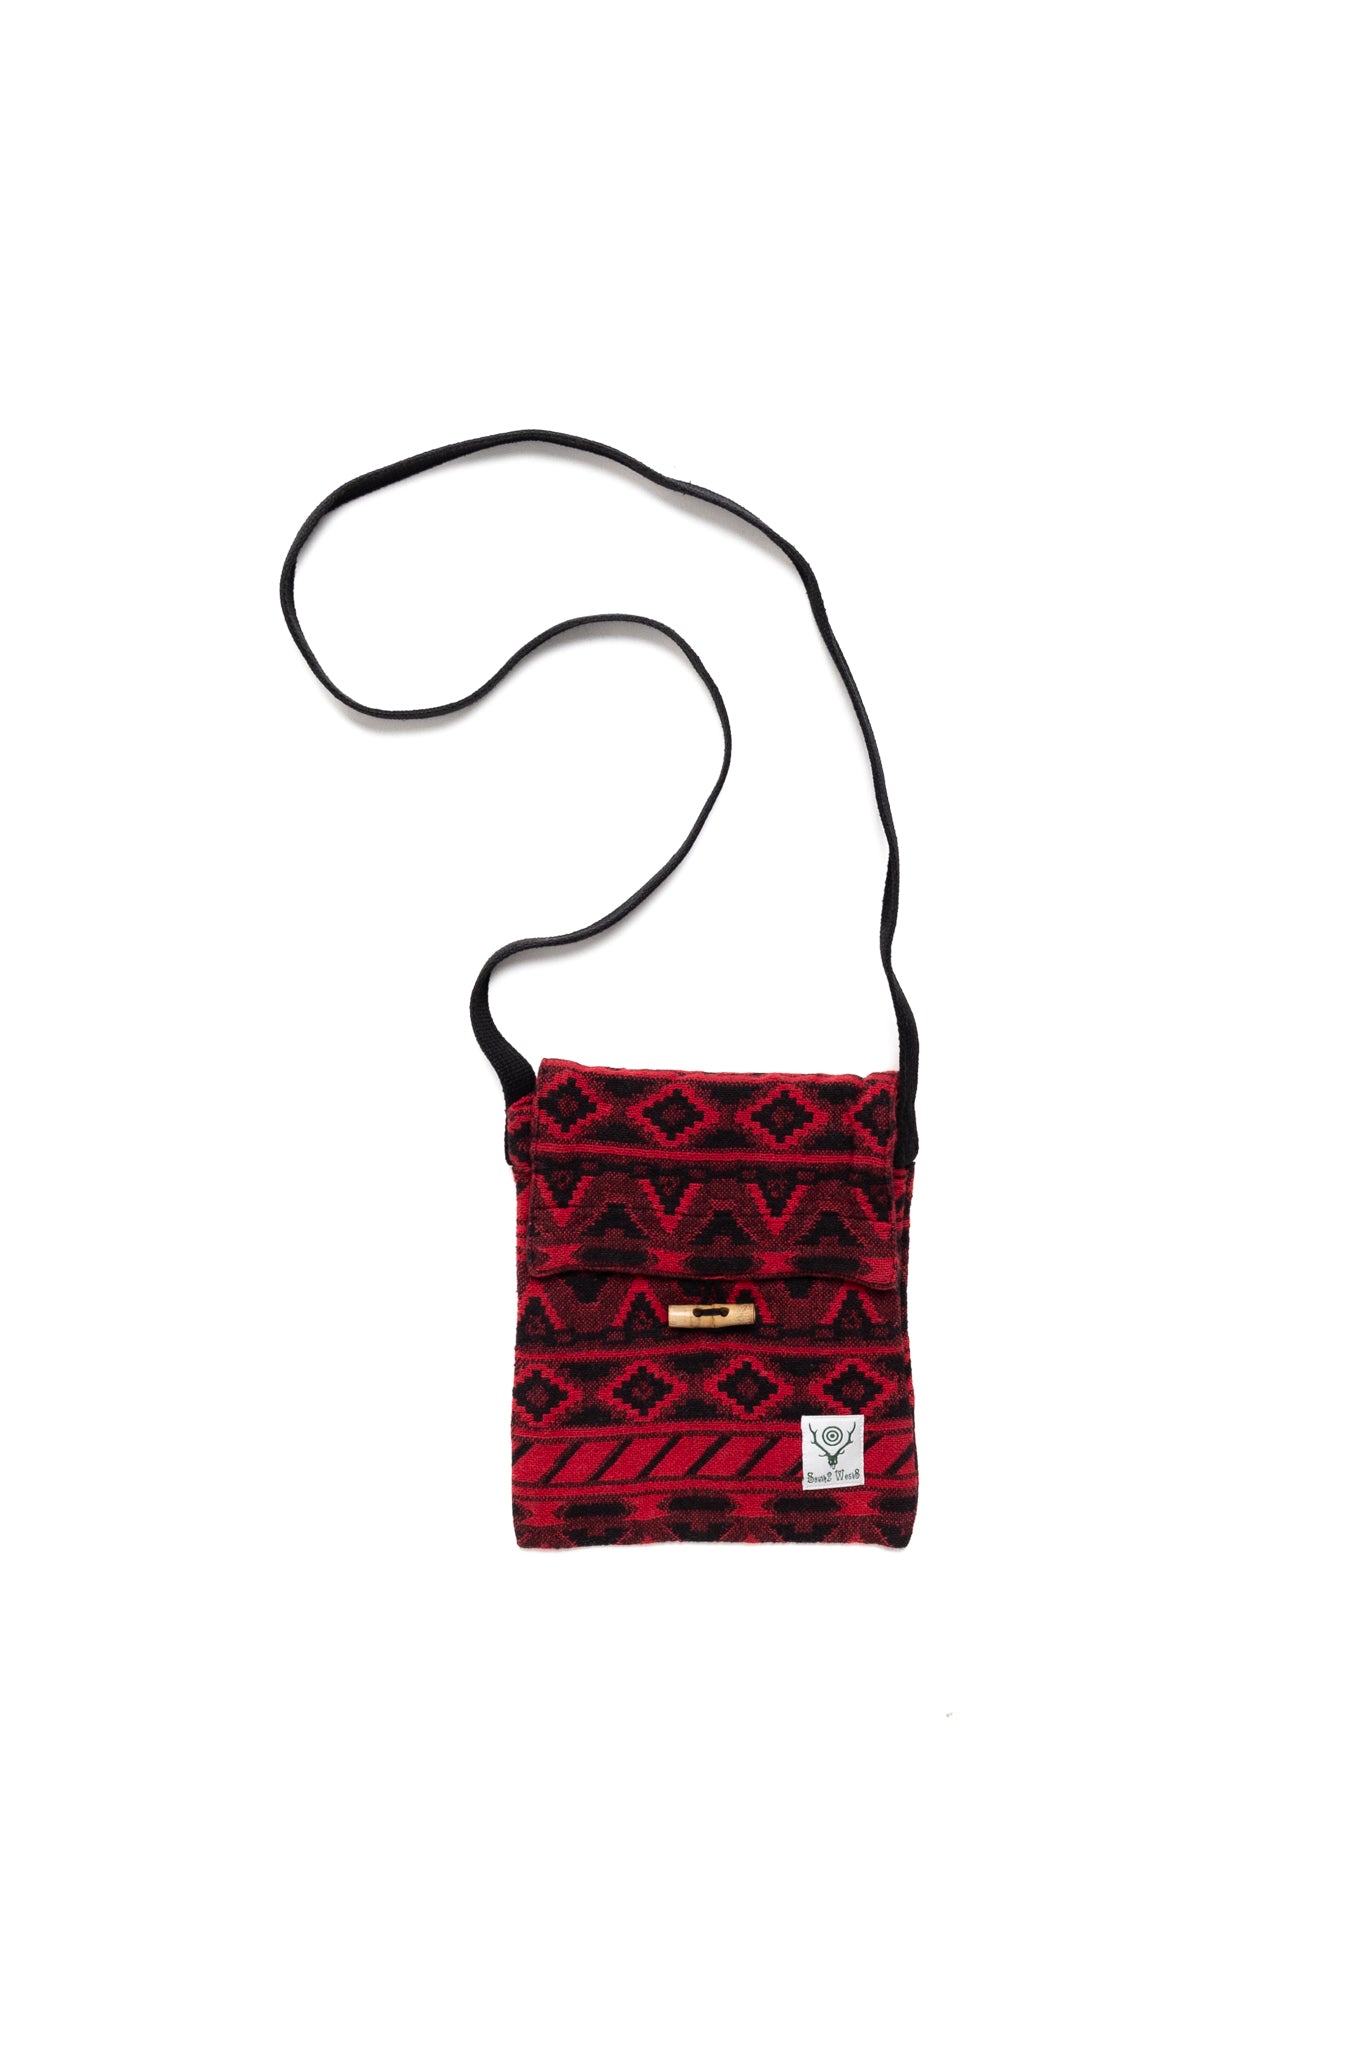 String Bag Cotton Dobby / Native Pattern - Red x Black